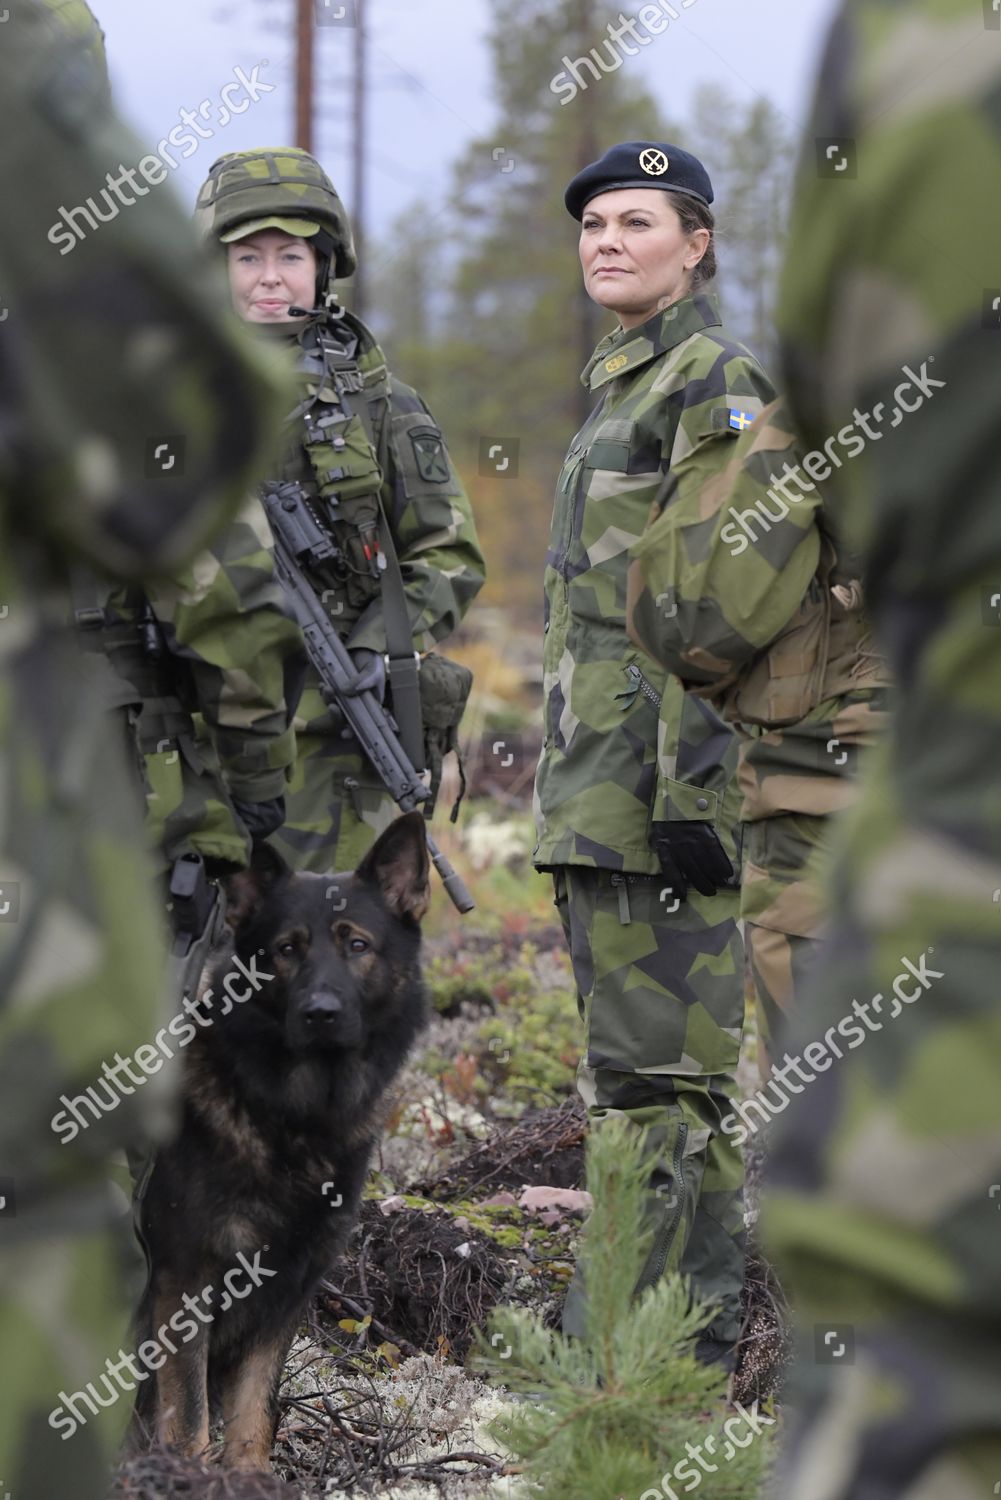 crown-princess-victoria-visits-the-swedish-home-guard-salenfjallen-sweden-shutterstock-editorial-12502339n.jpg